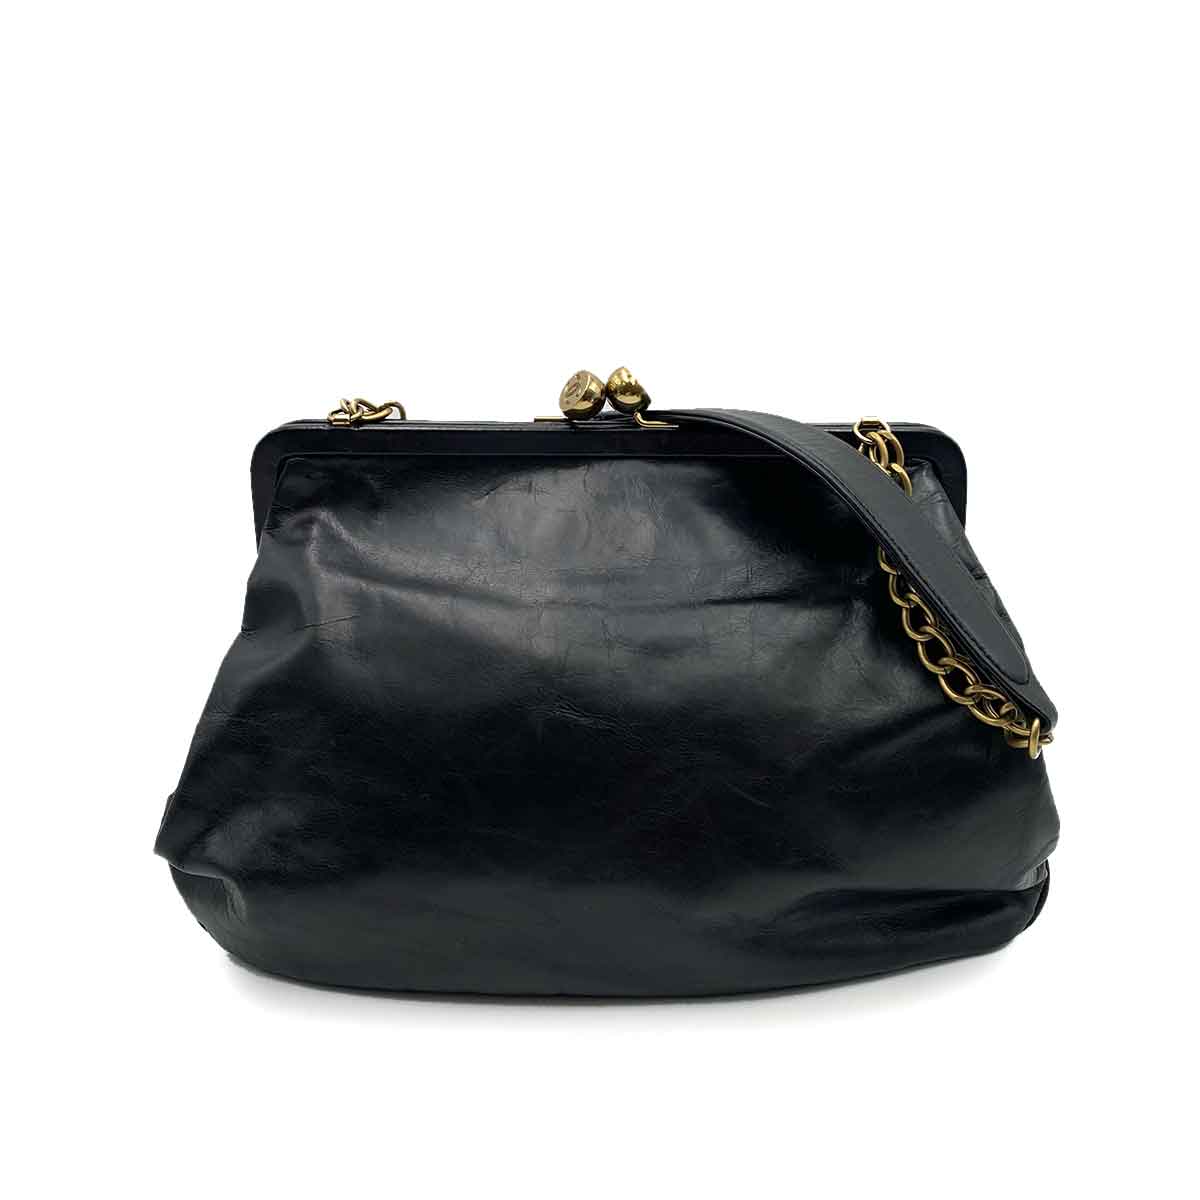 Chanel CHANEL VINTAGE POUCH CHAIN SHOULDER BAG BLACK LAMB SKIN 90231272